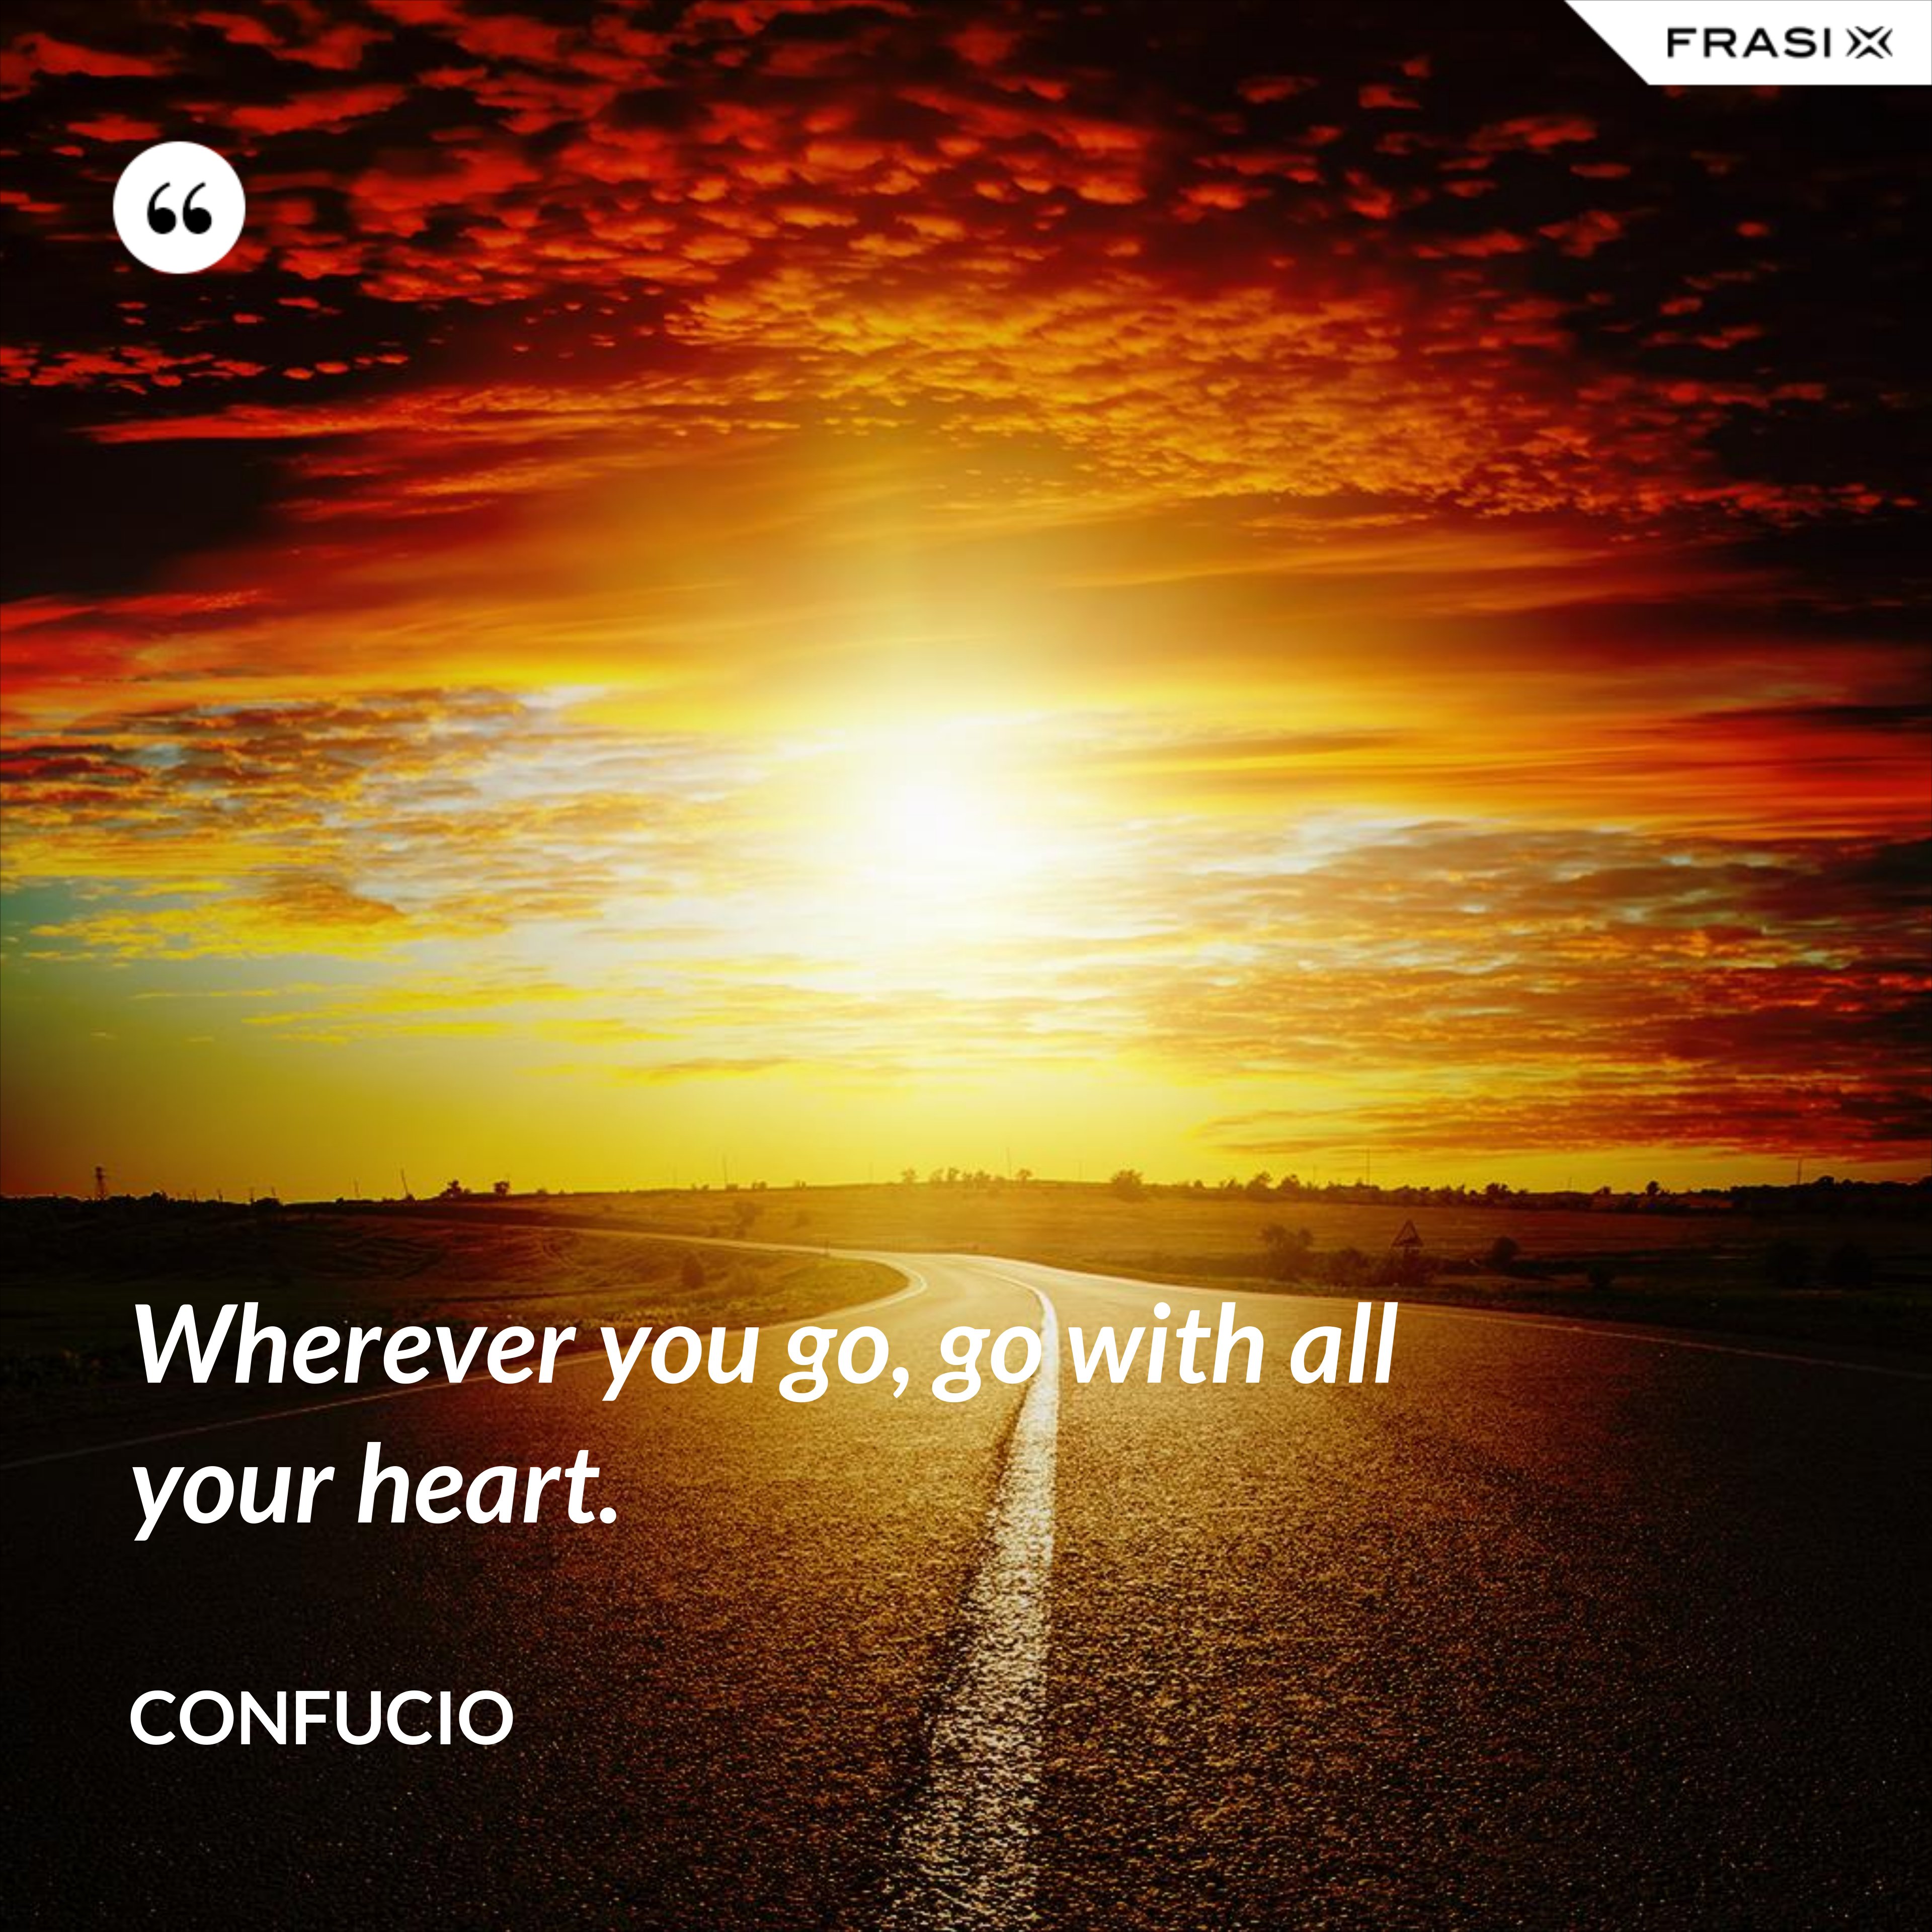 Wherever you go, go with all your heart. - Confucio